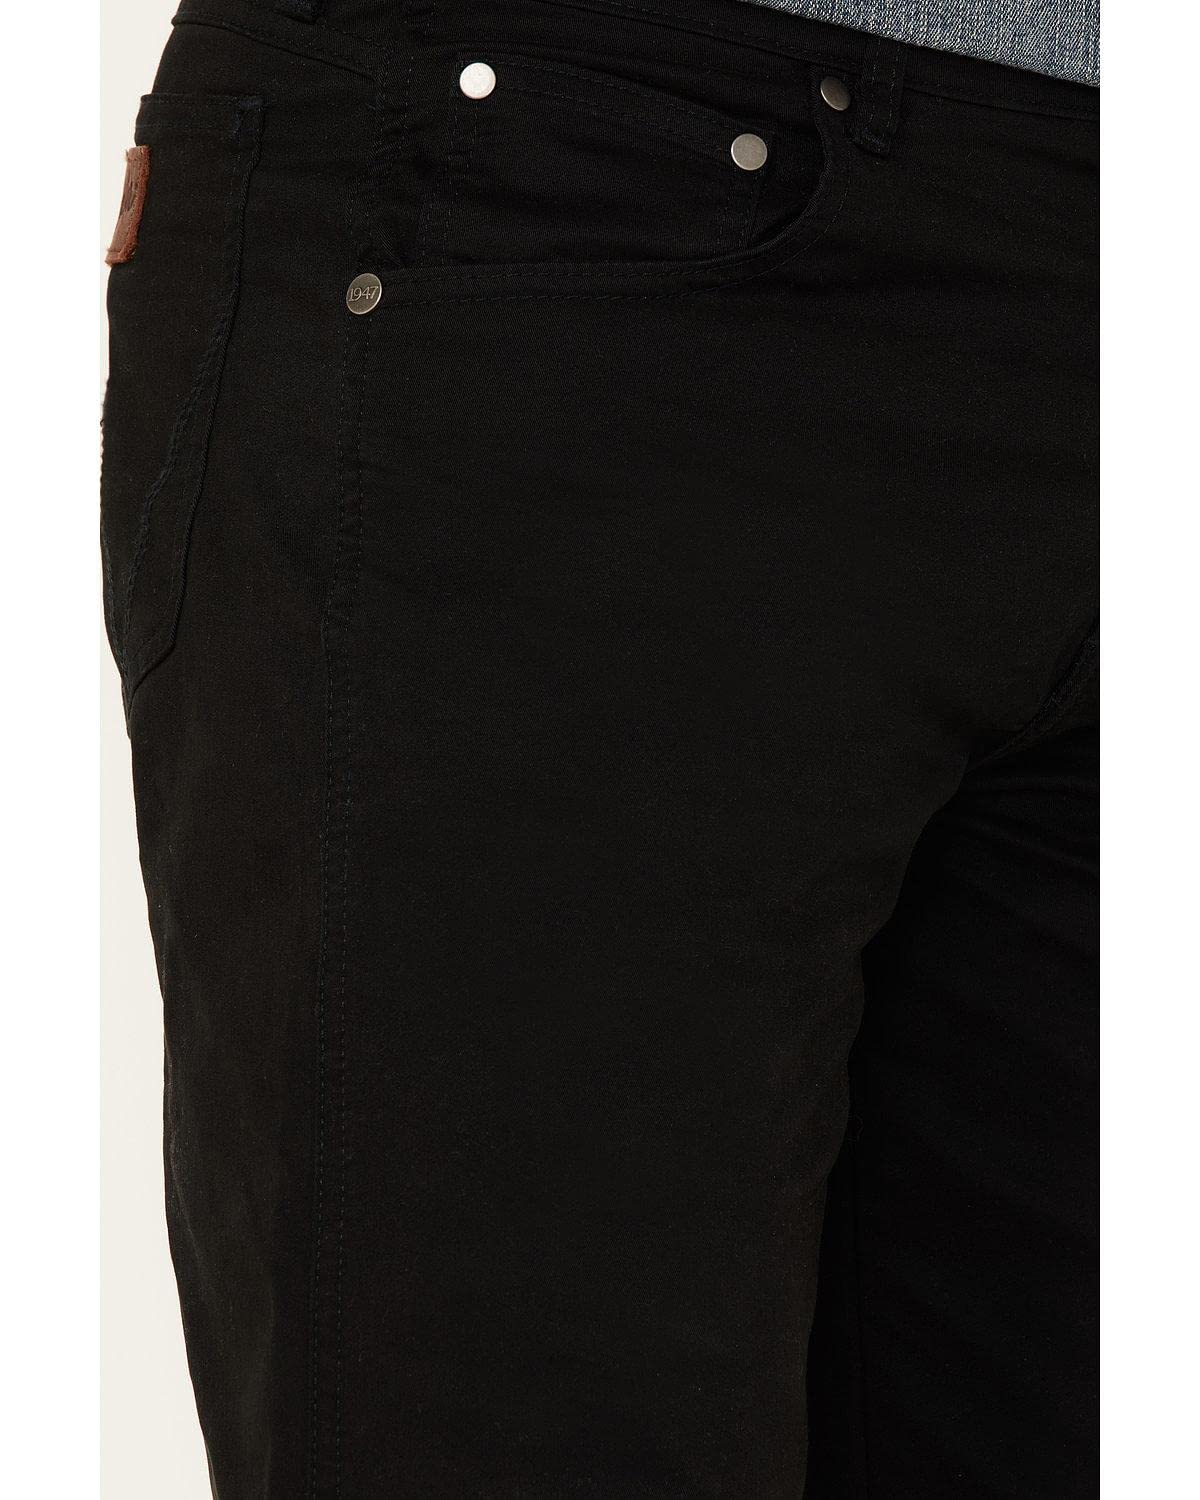 Wrangler Vaqueros retro de pierna recta para hombre, color negro, 36 W x 30 L